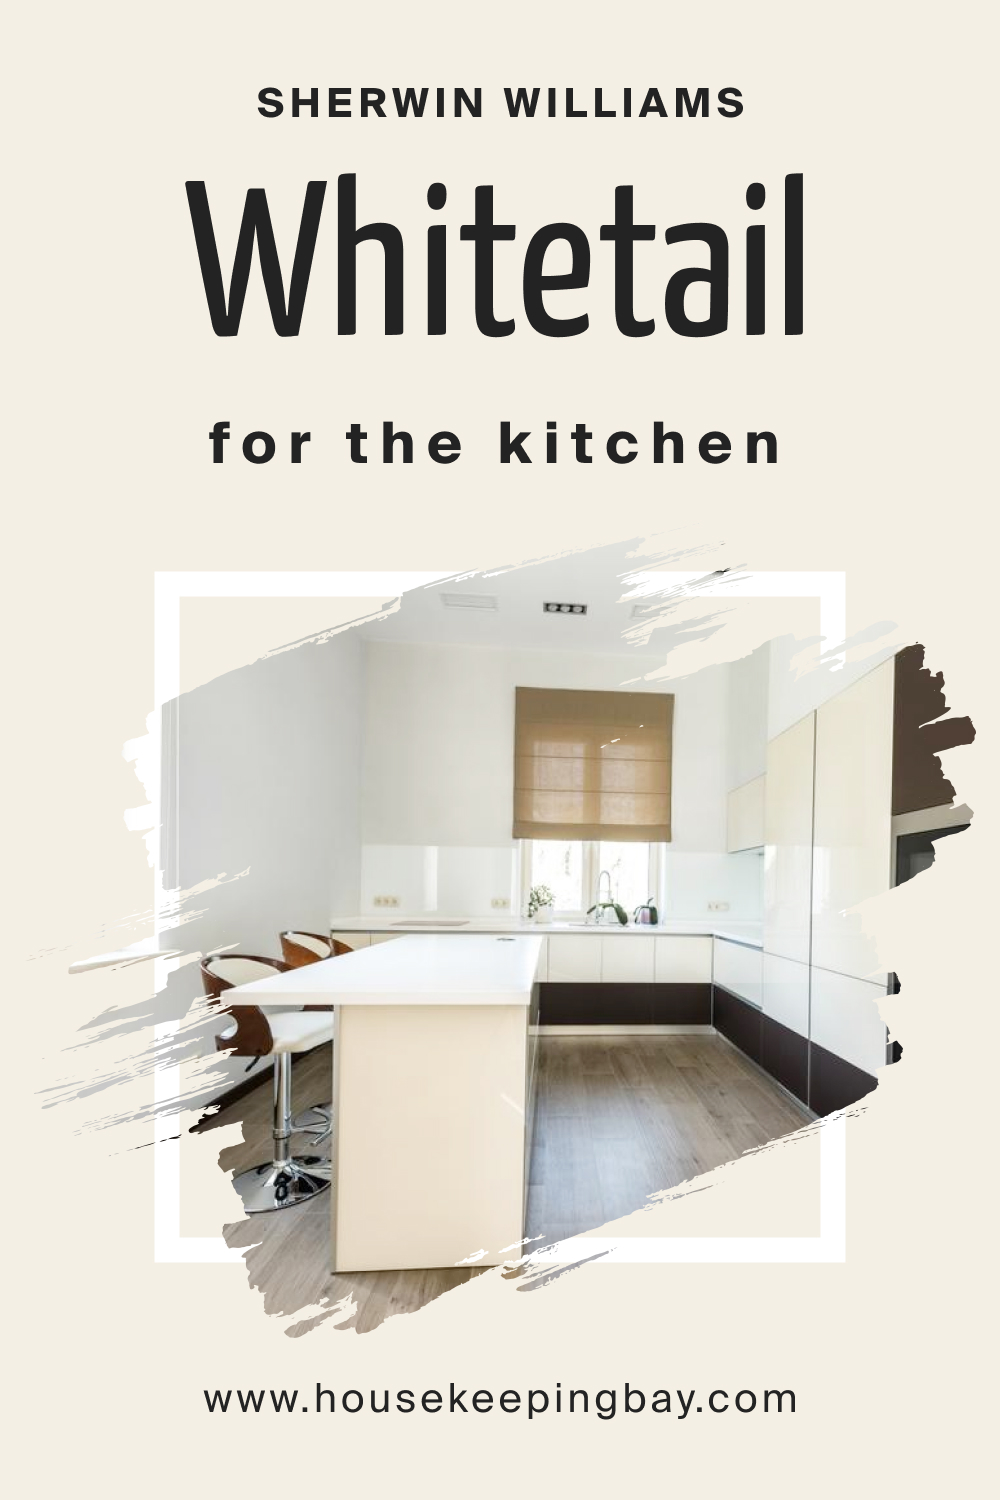 Sherwin Williams. SW Whitetail For the Kitchen